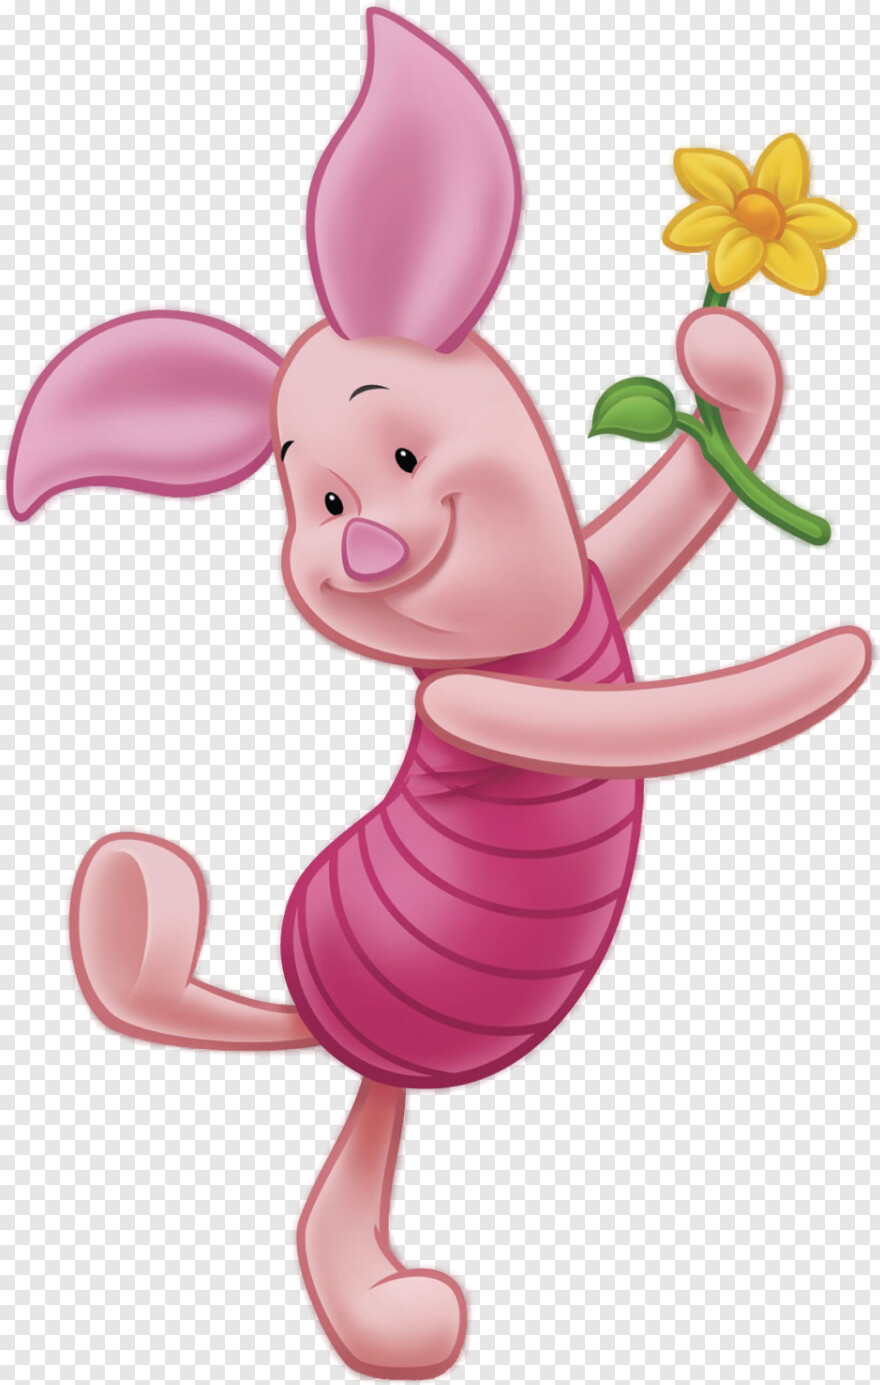  Winnie The Pooh, Pooh, Piglet